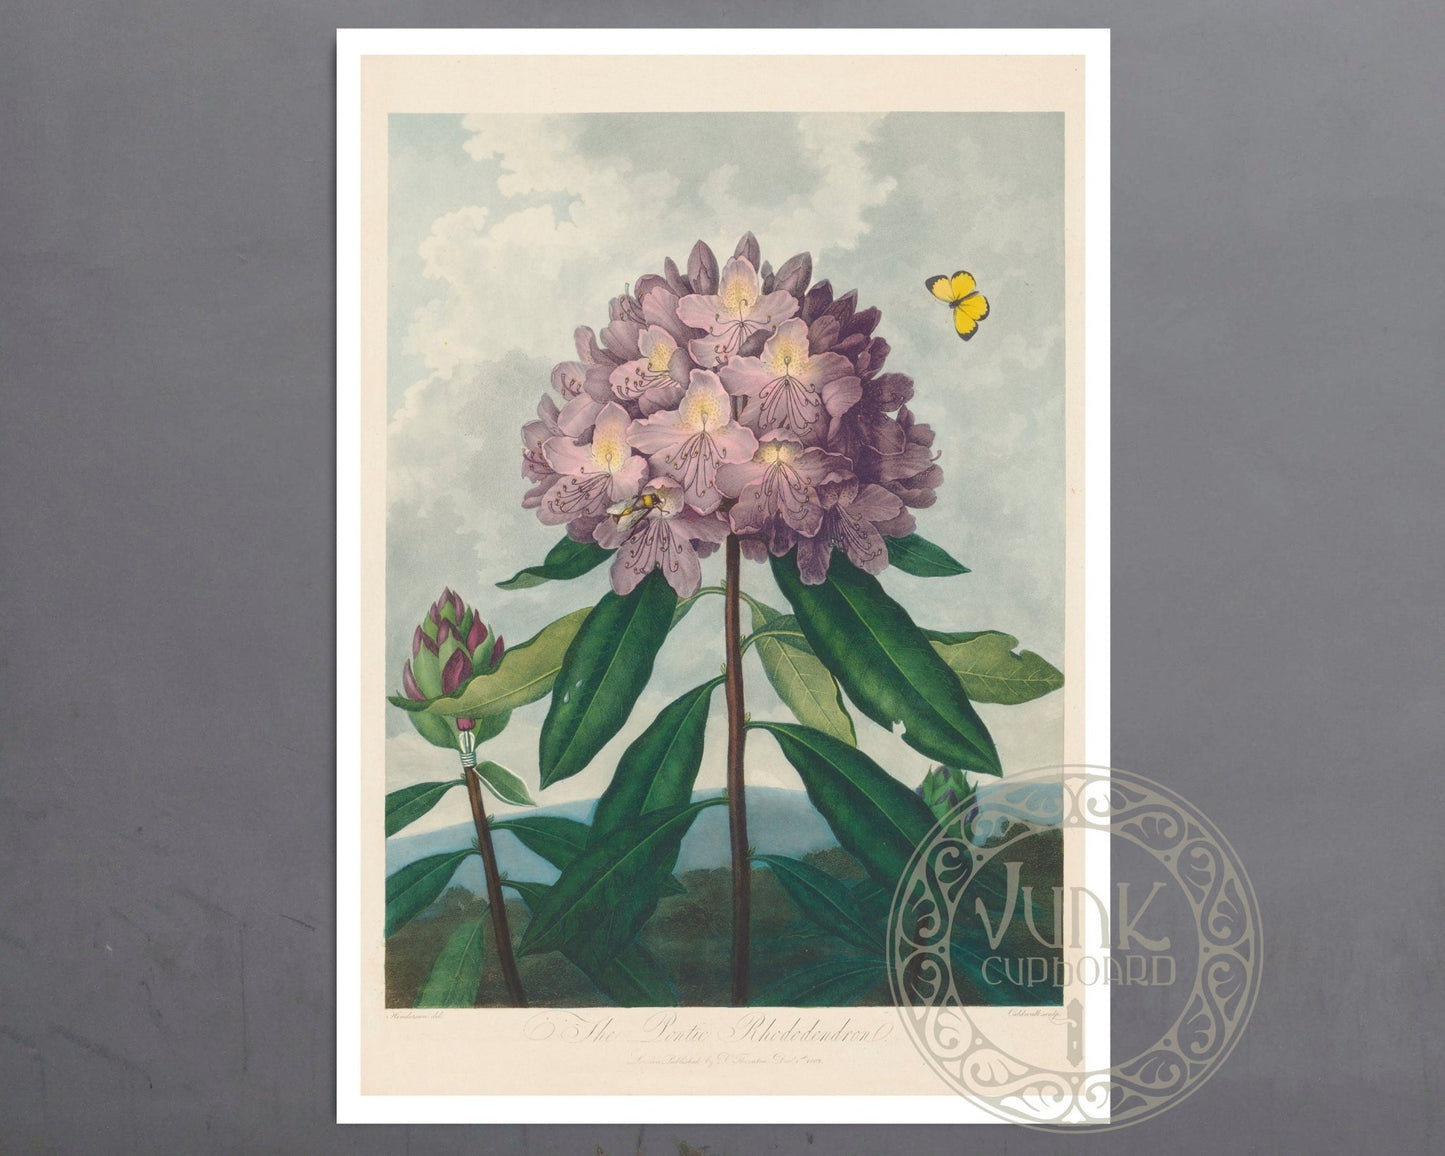 Vintage Botanical Illustration "The Pontic Rhododendron" (c.1799 - 1807) - Mabon Gallery